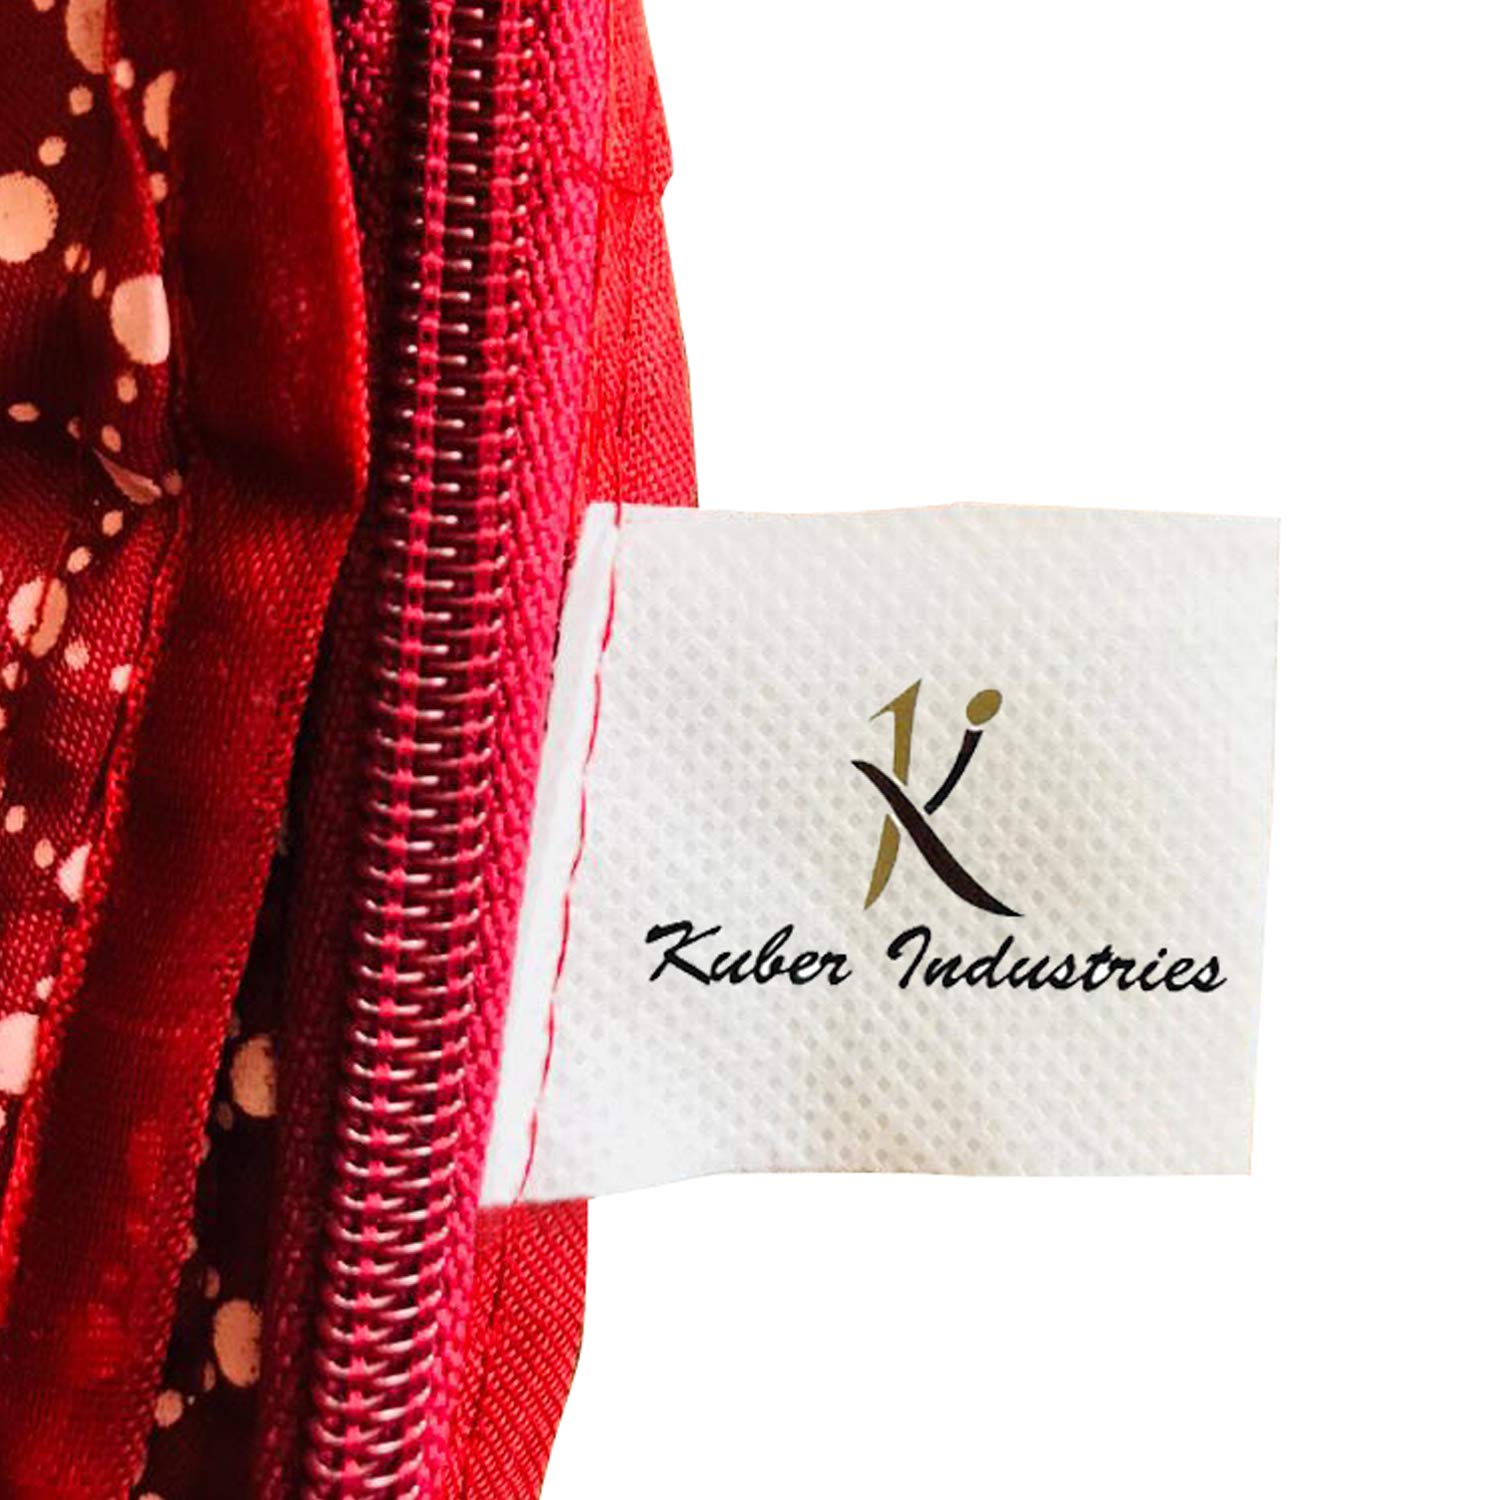 Kuber Industries Cotton 2 Piece Fingerless Arm Sleeves - Black (KU06002)